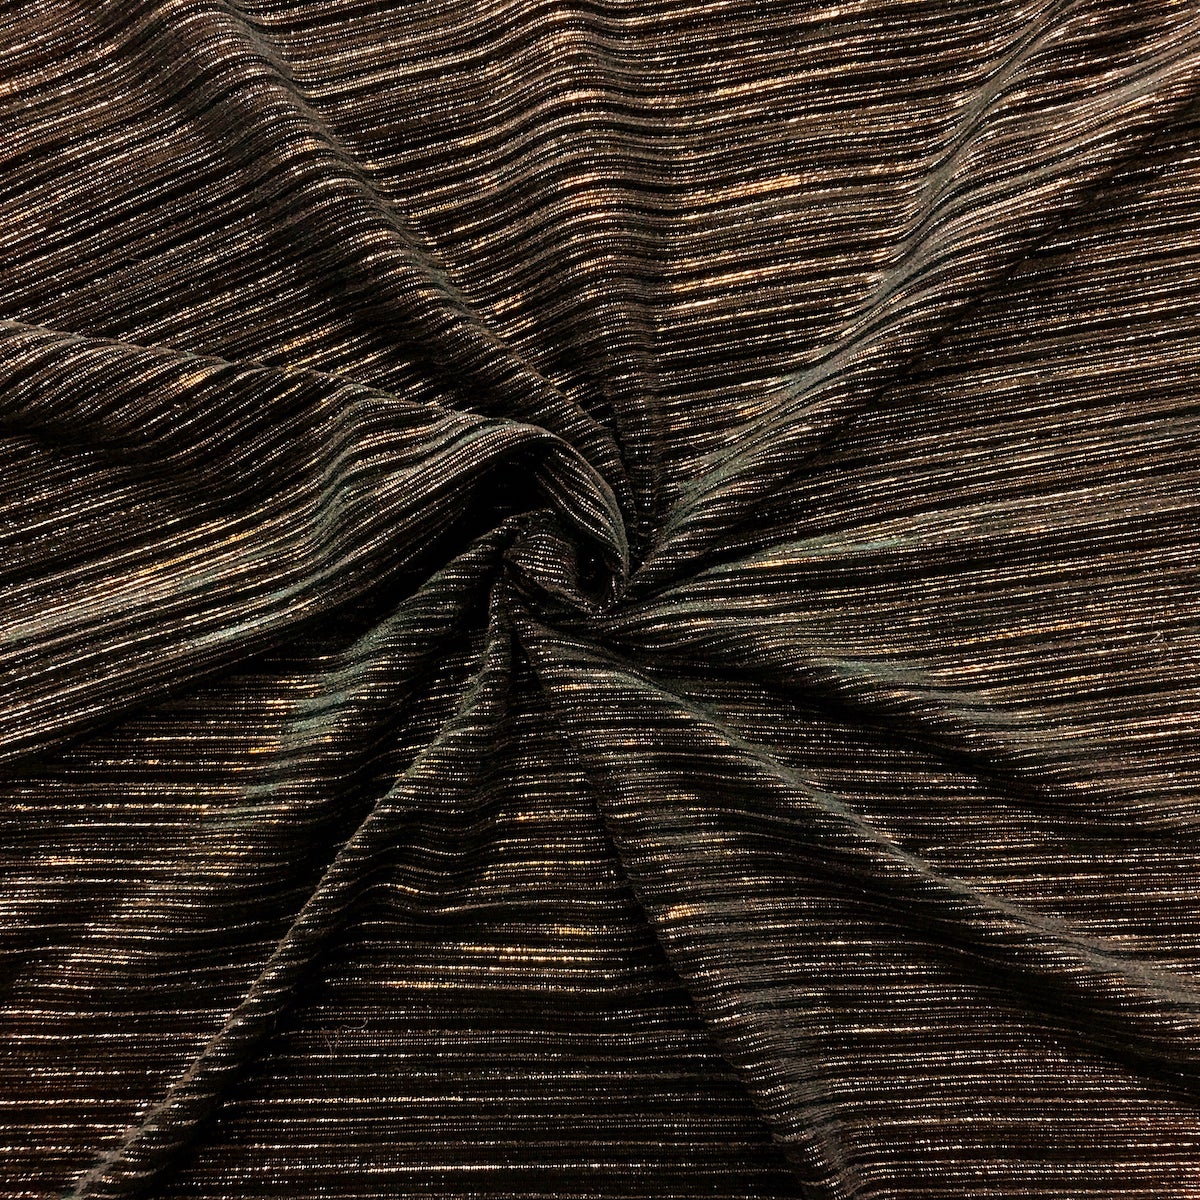 Bronze | Black Metallic Pleated Stretch Velvet Fabric